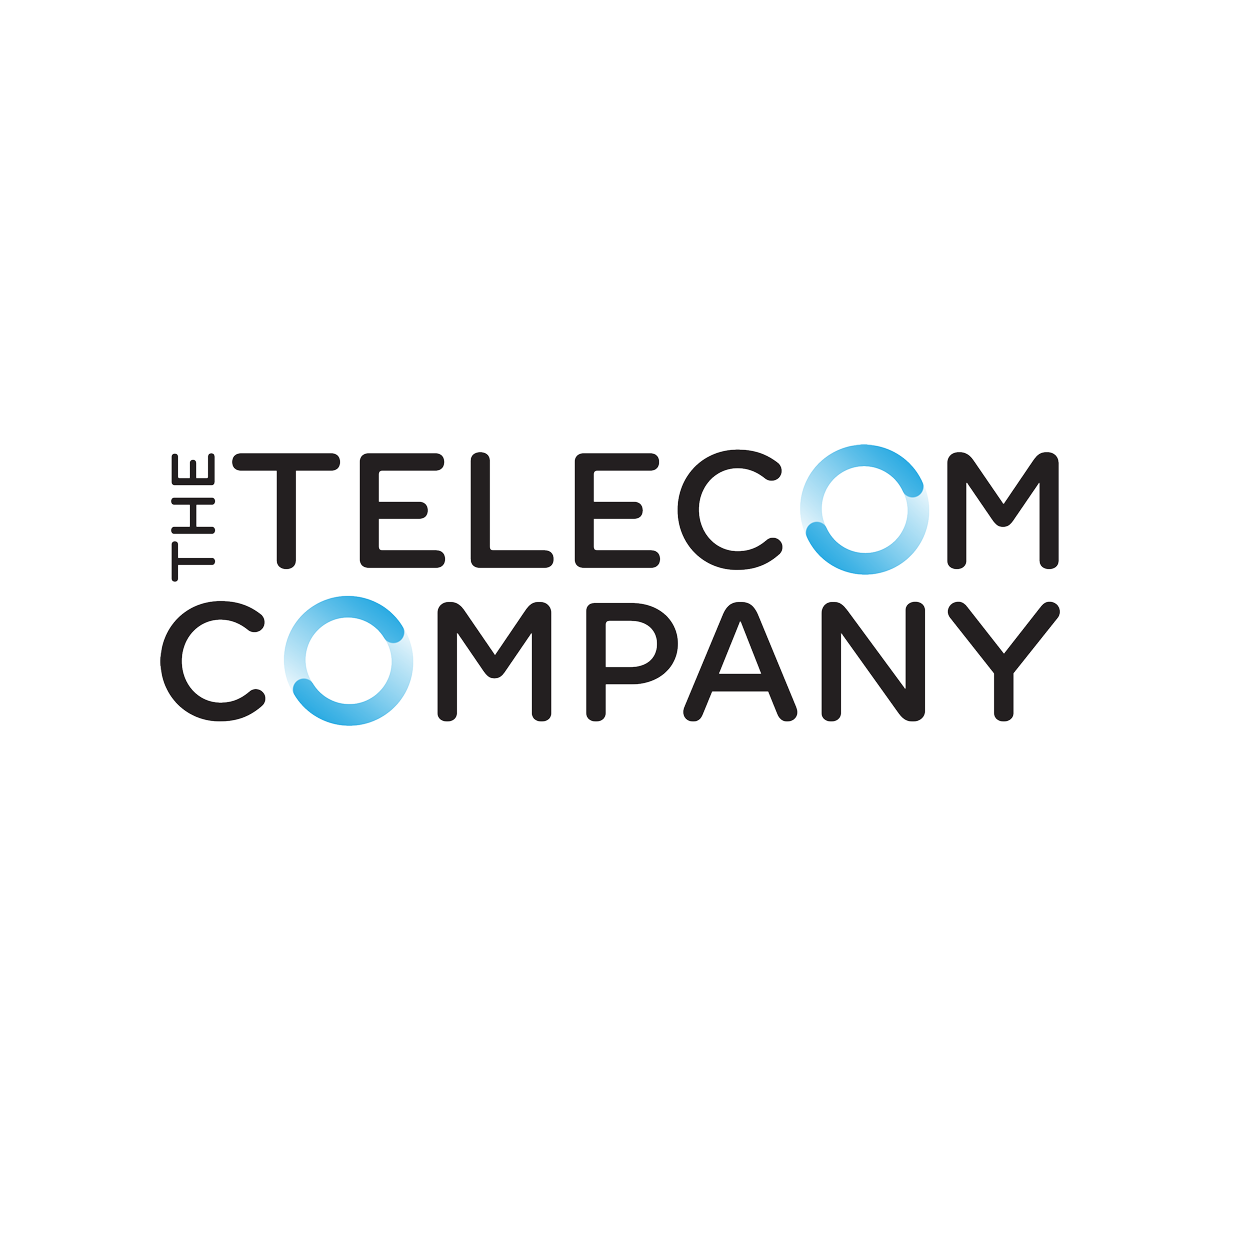 Telecommunication company